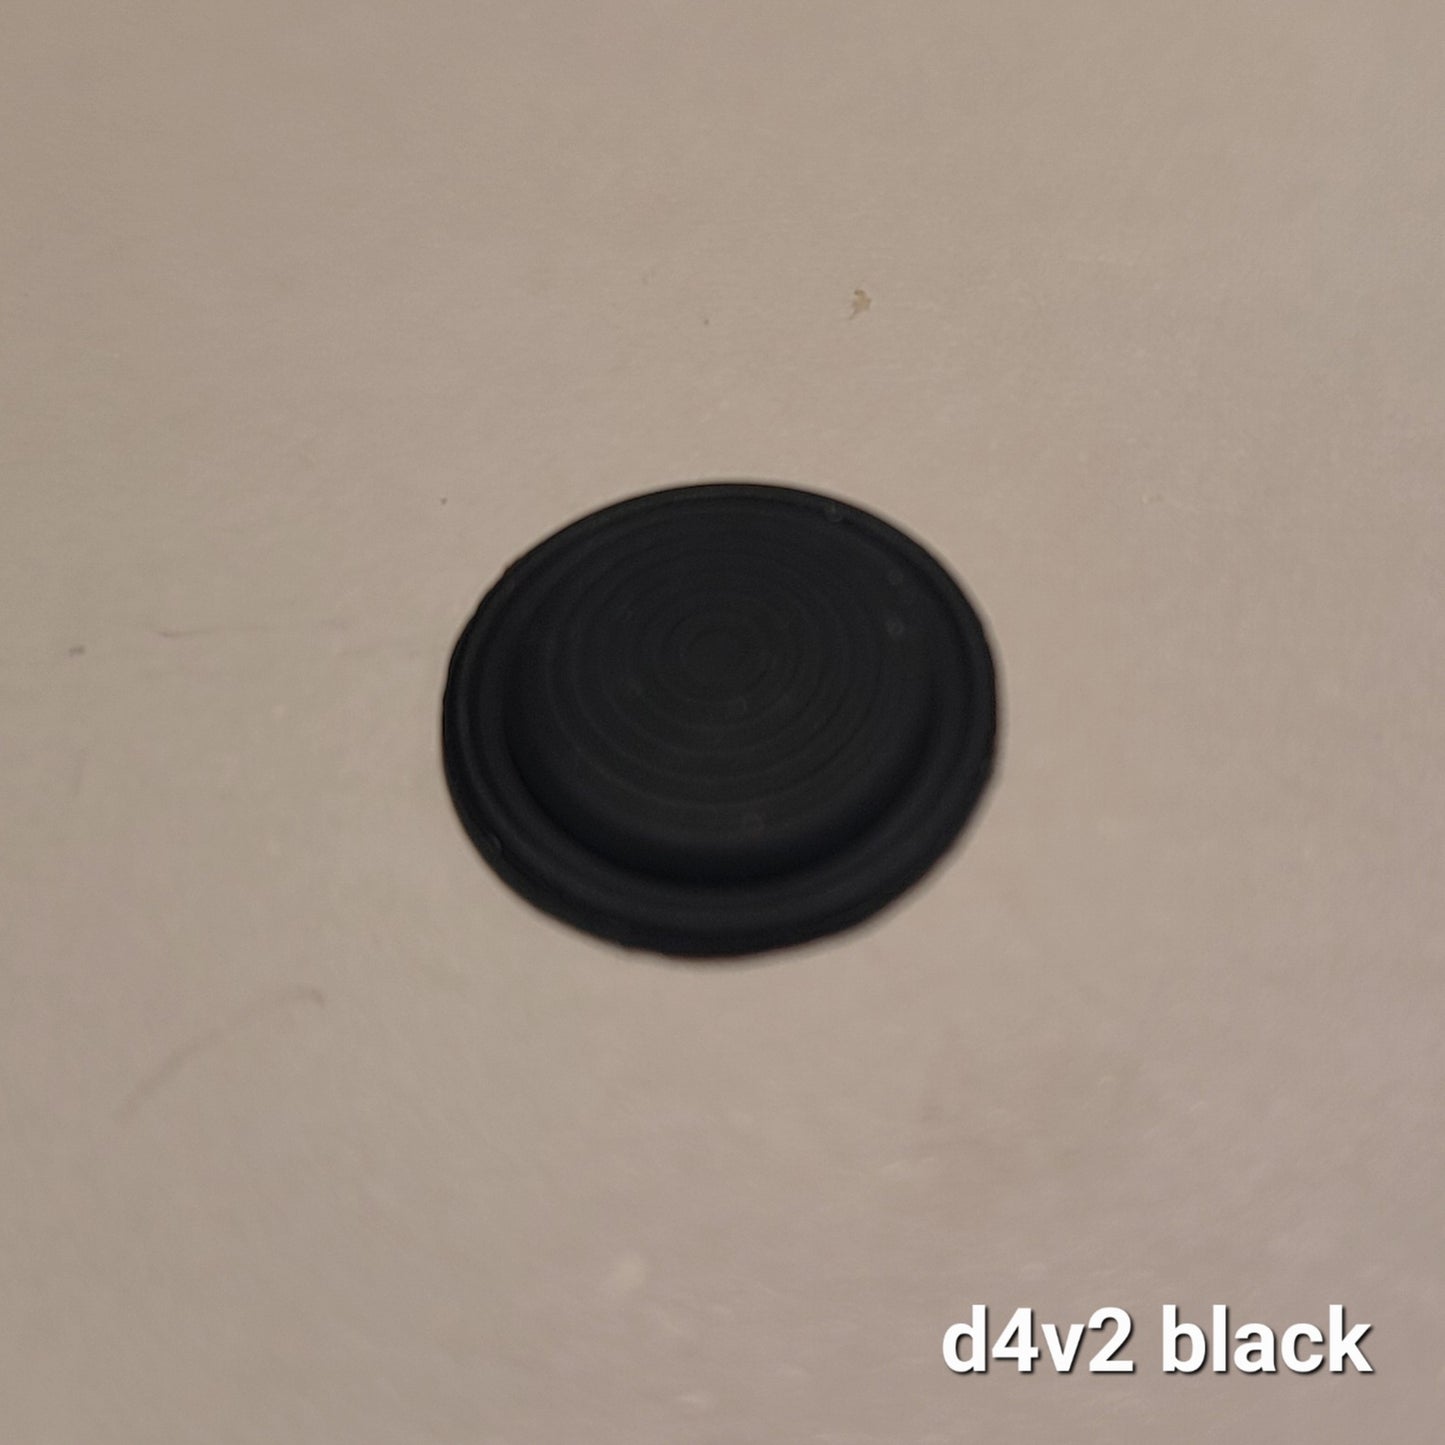 Emisar/Noctigon replacement Switch Ring/Button BLACK BUTTON